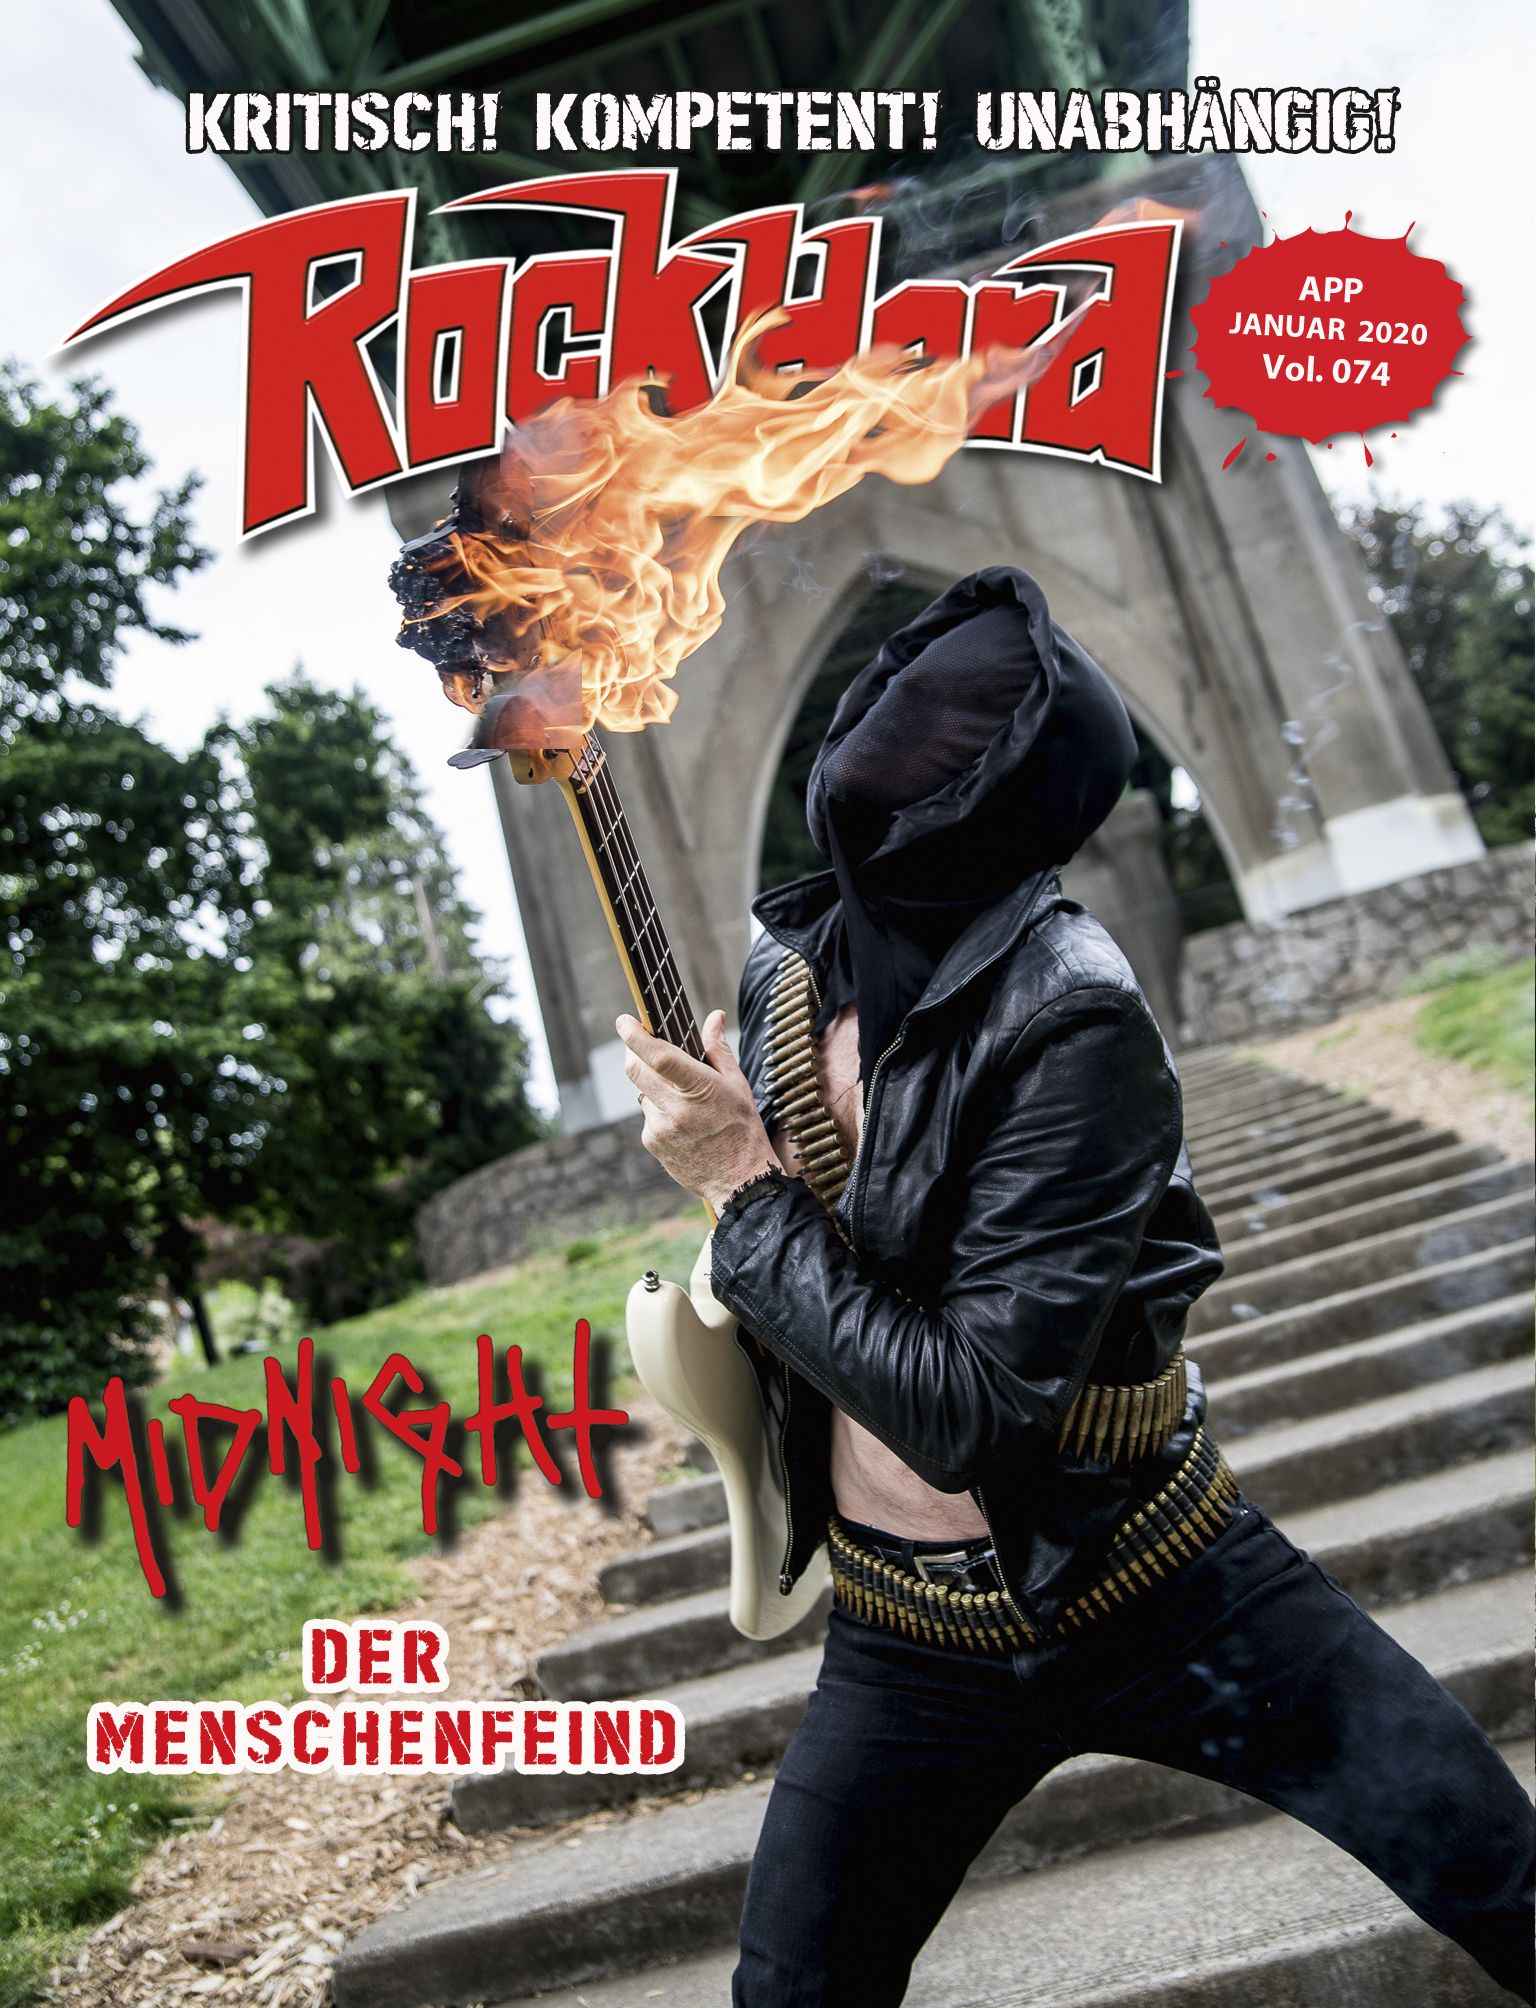 Rock-Hard-App Vol. 74 ist da!